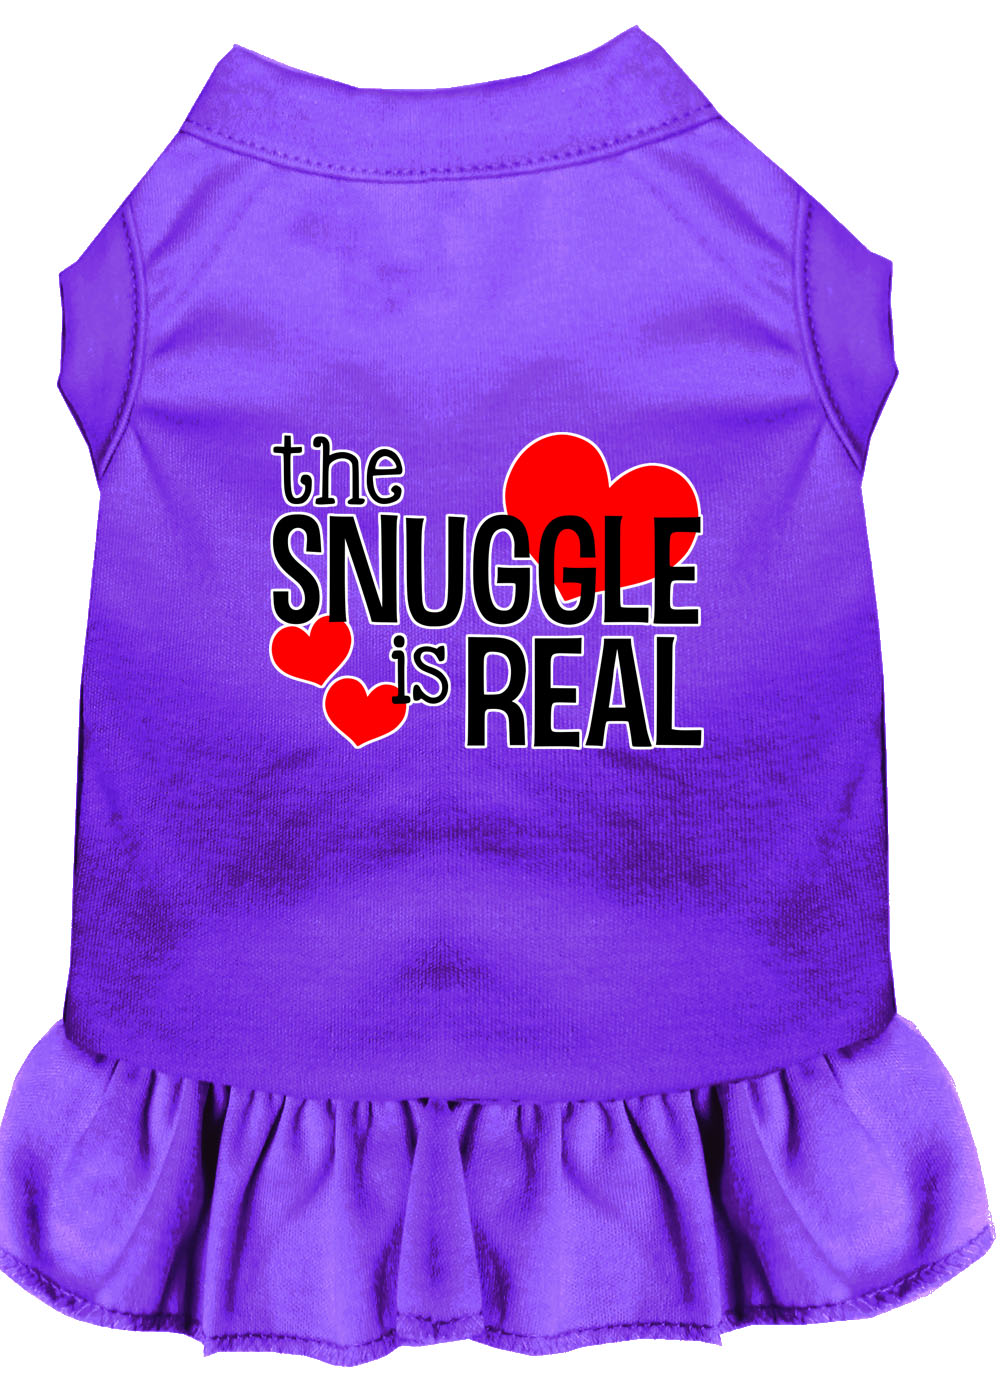 The Snuggle is Real Screen Print Dog Dress Purple Lg